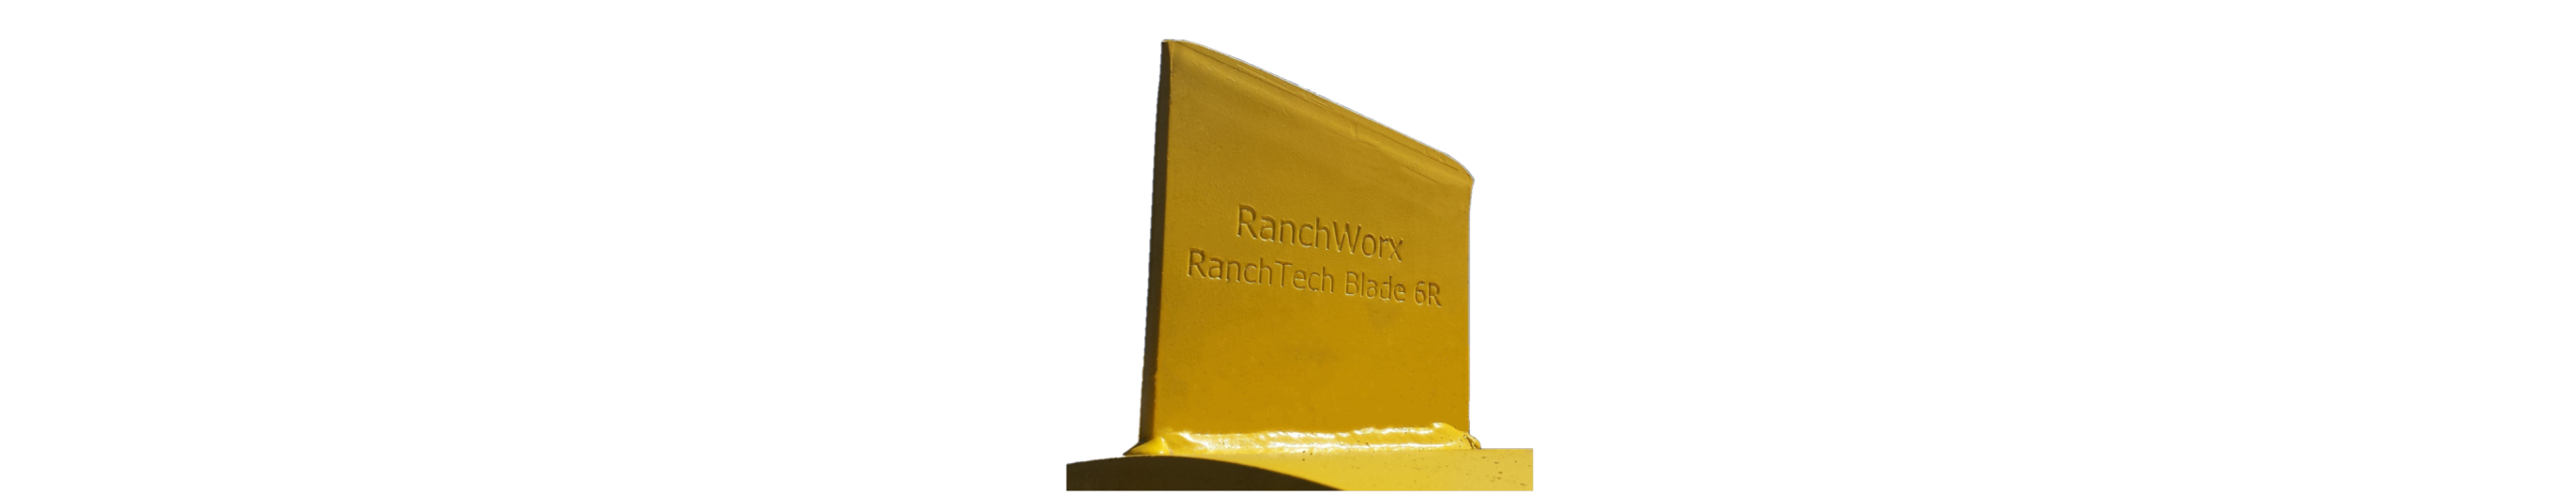 ranchworx ranchtech blade lifetime warranty